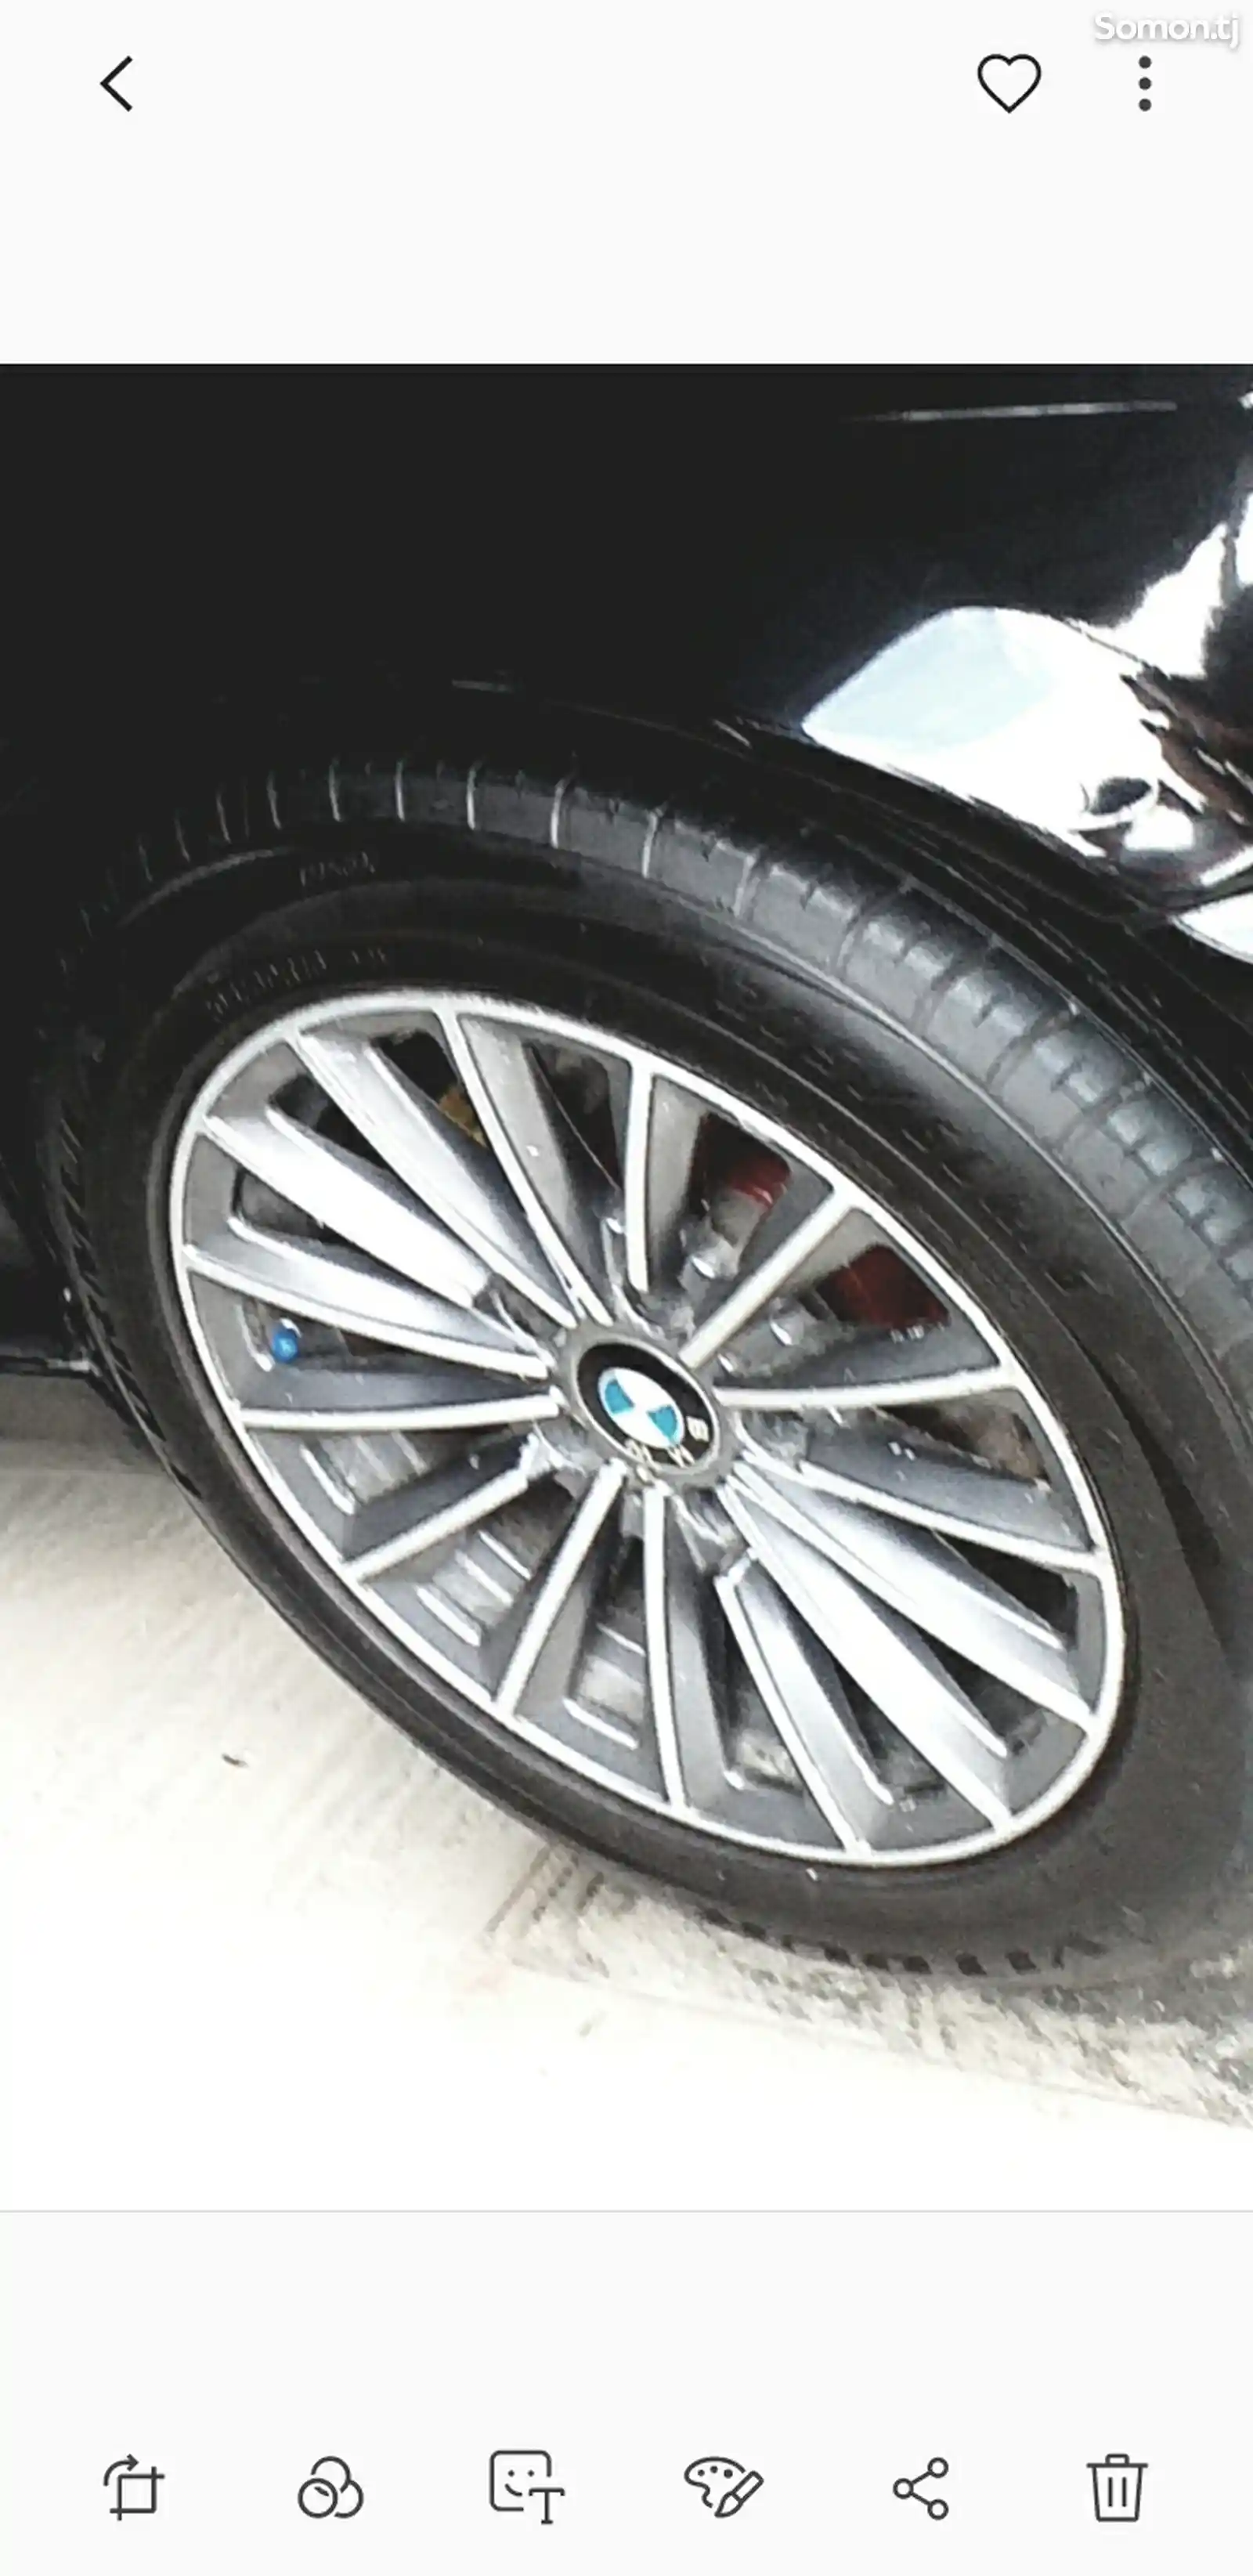 BMW 3 series, 2004-6